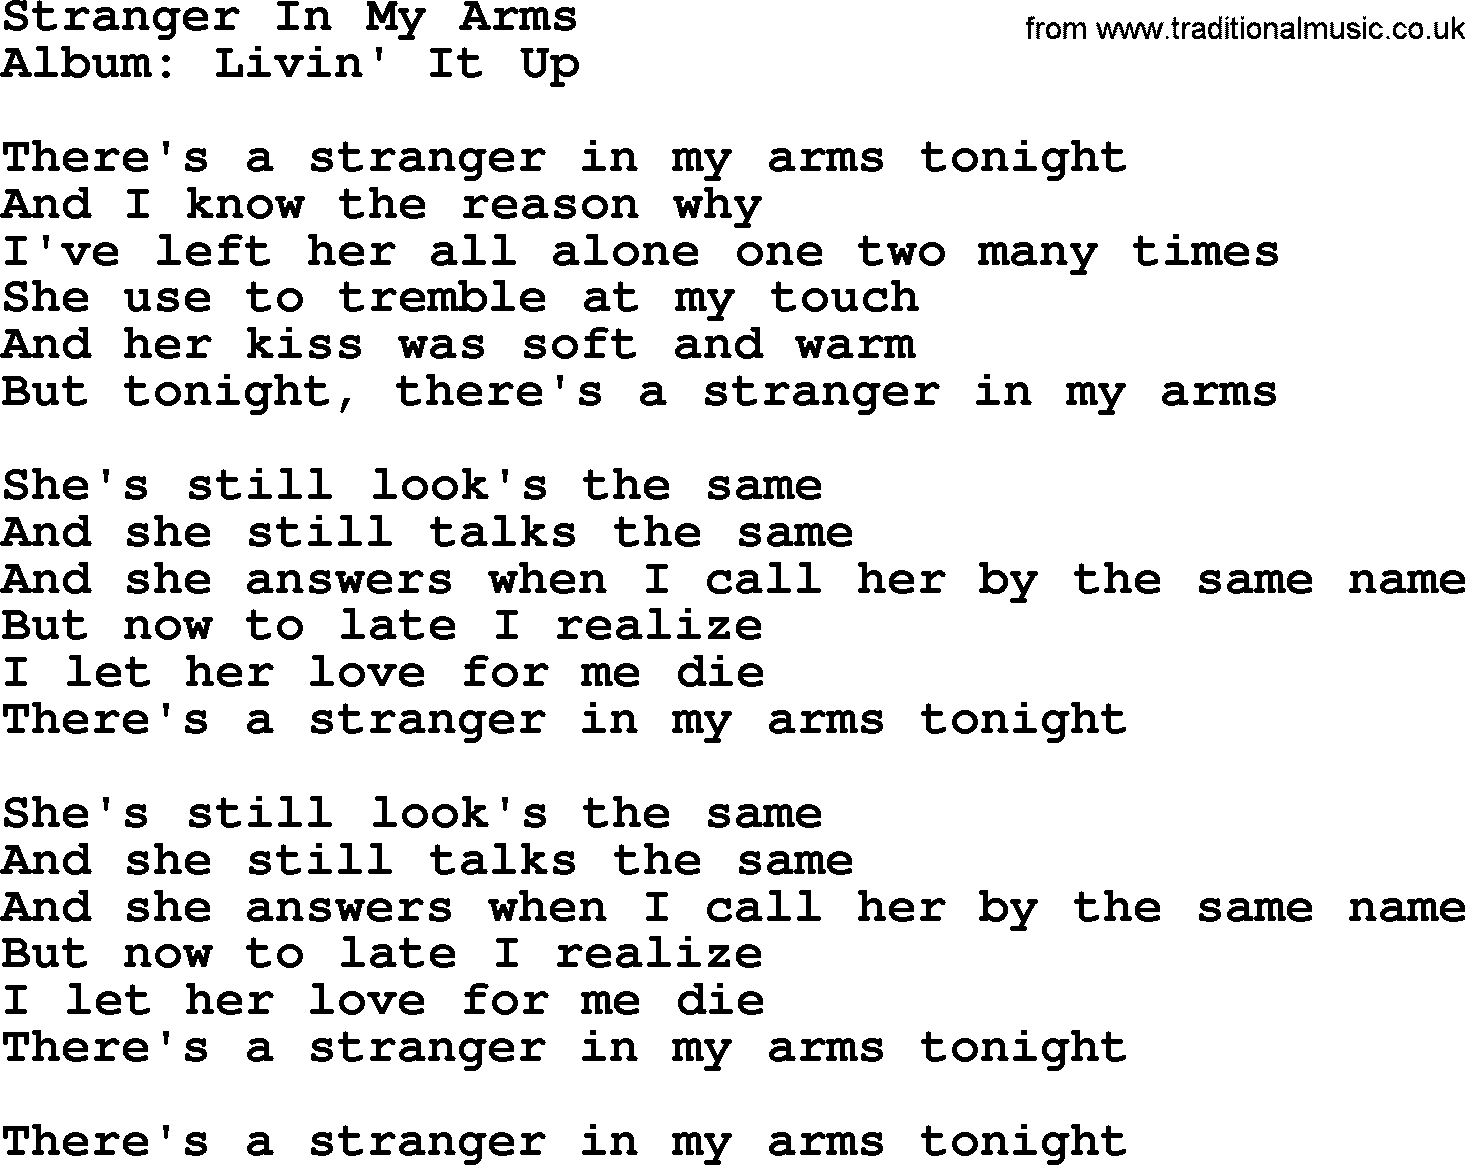 George Strait song: Stranger In My Arms, lyrics